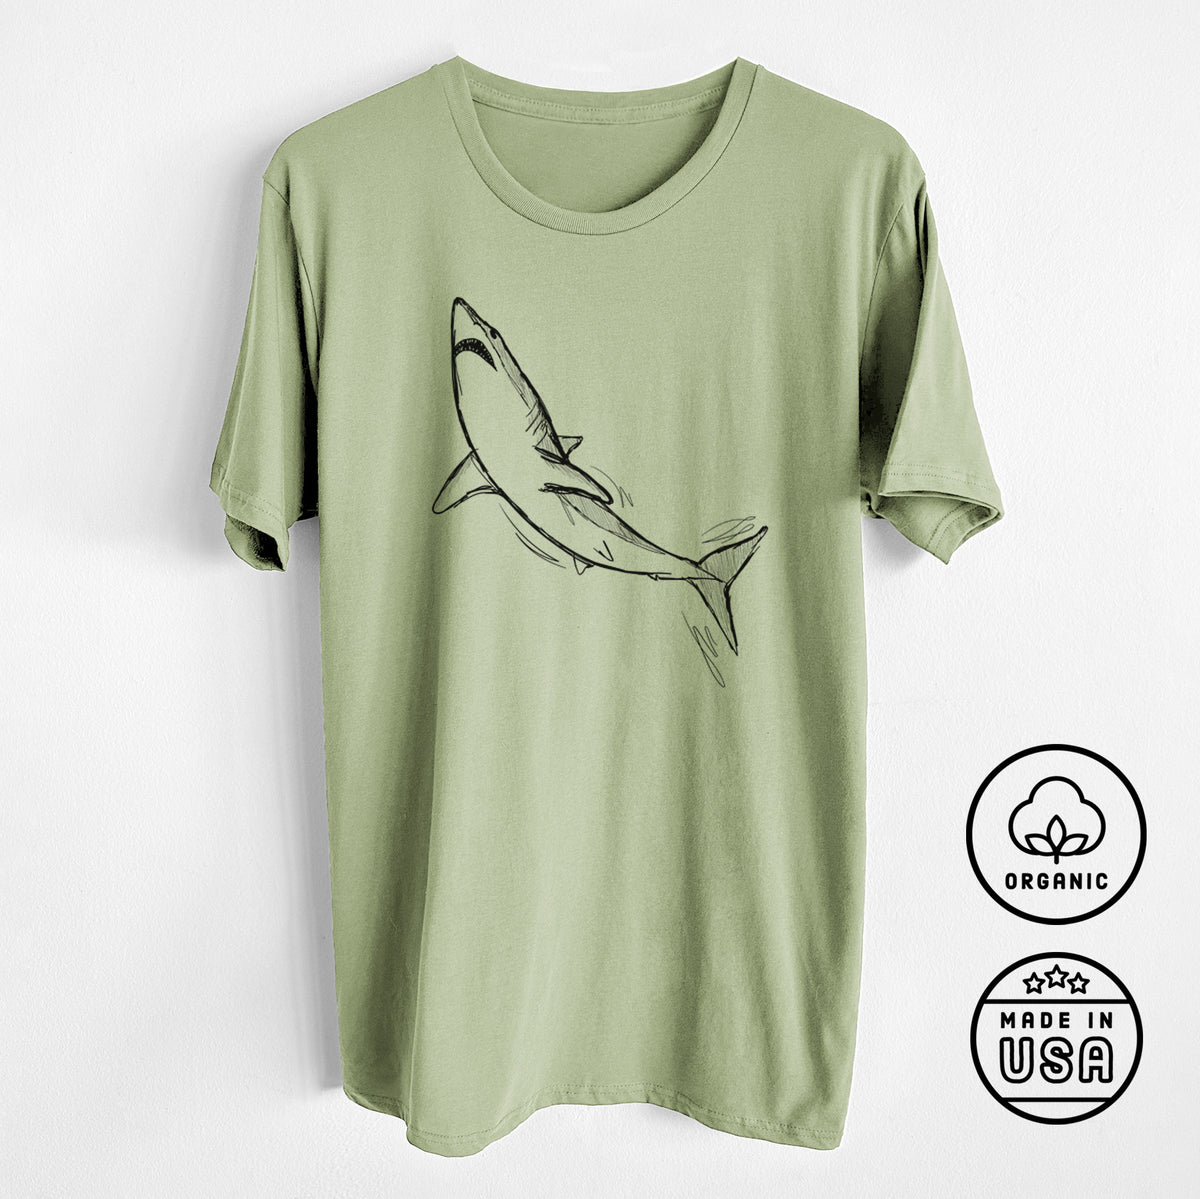 Shortfin Mako Shark - Unisex Crewneck - Made in USA - 100% Organic Cotton